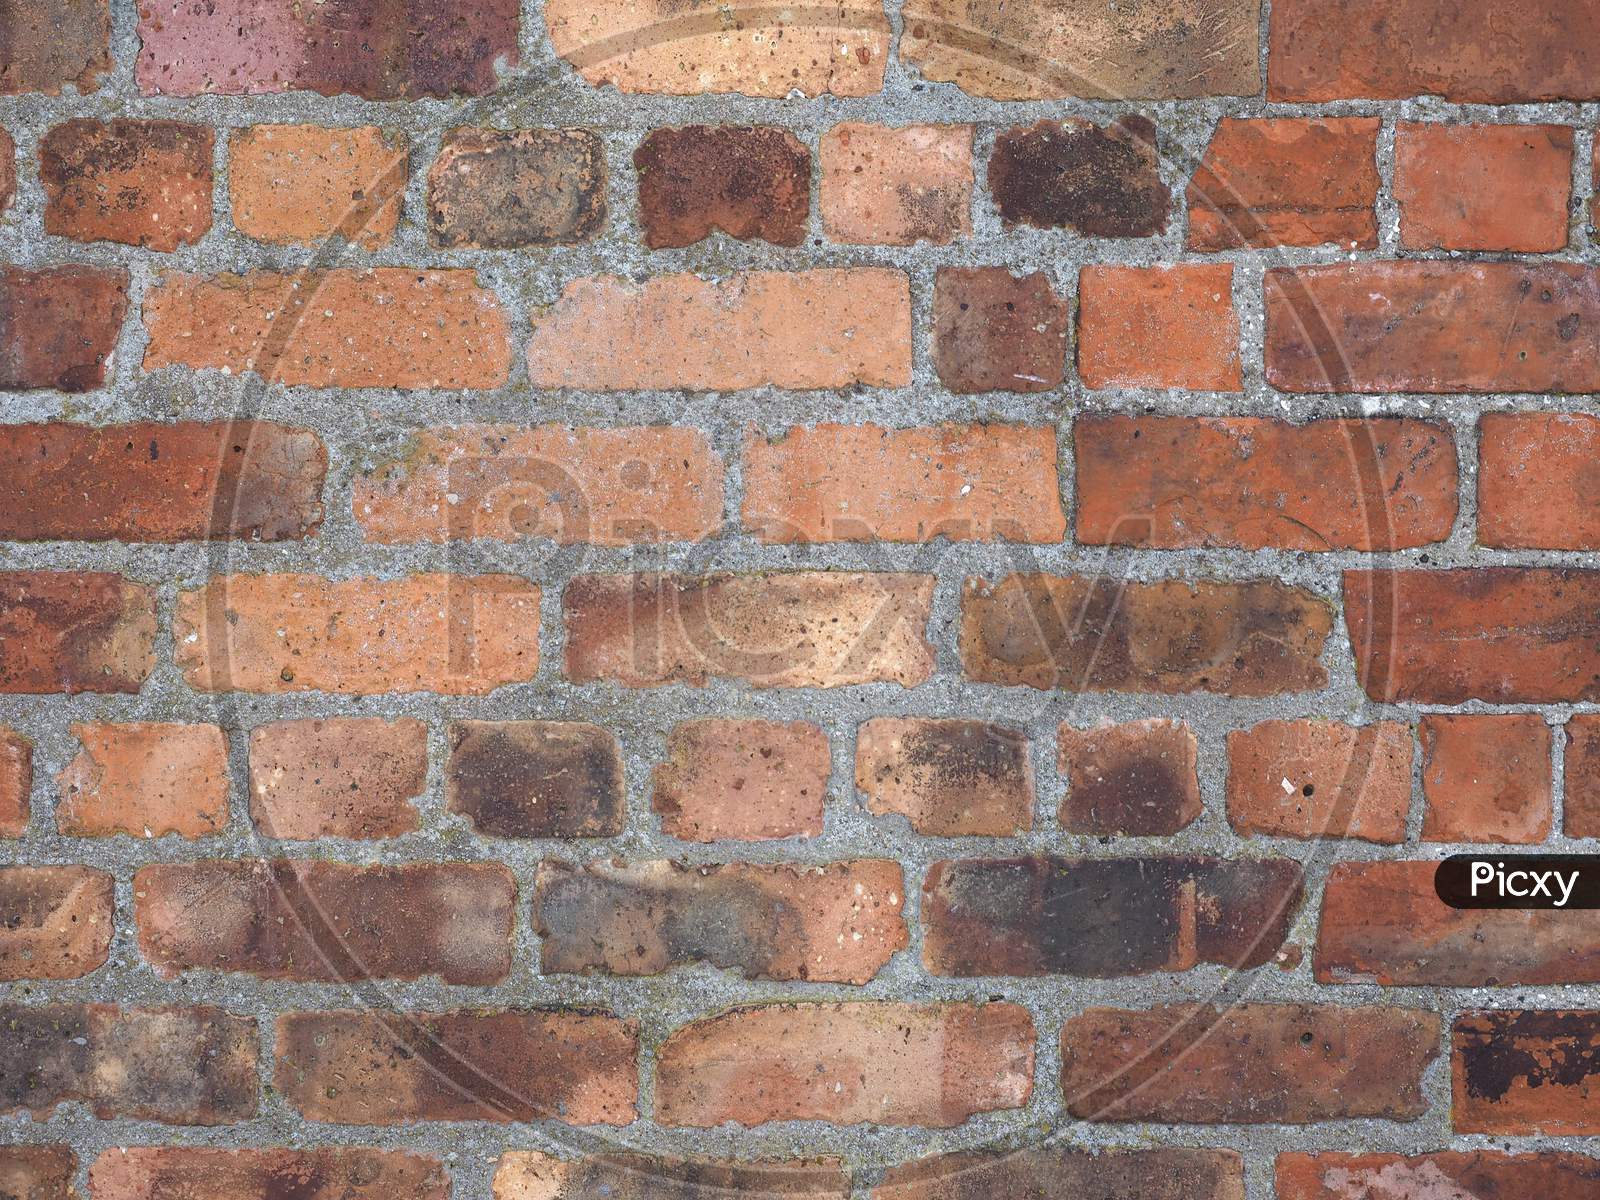 Red Brick Texture Background